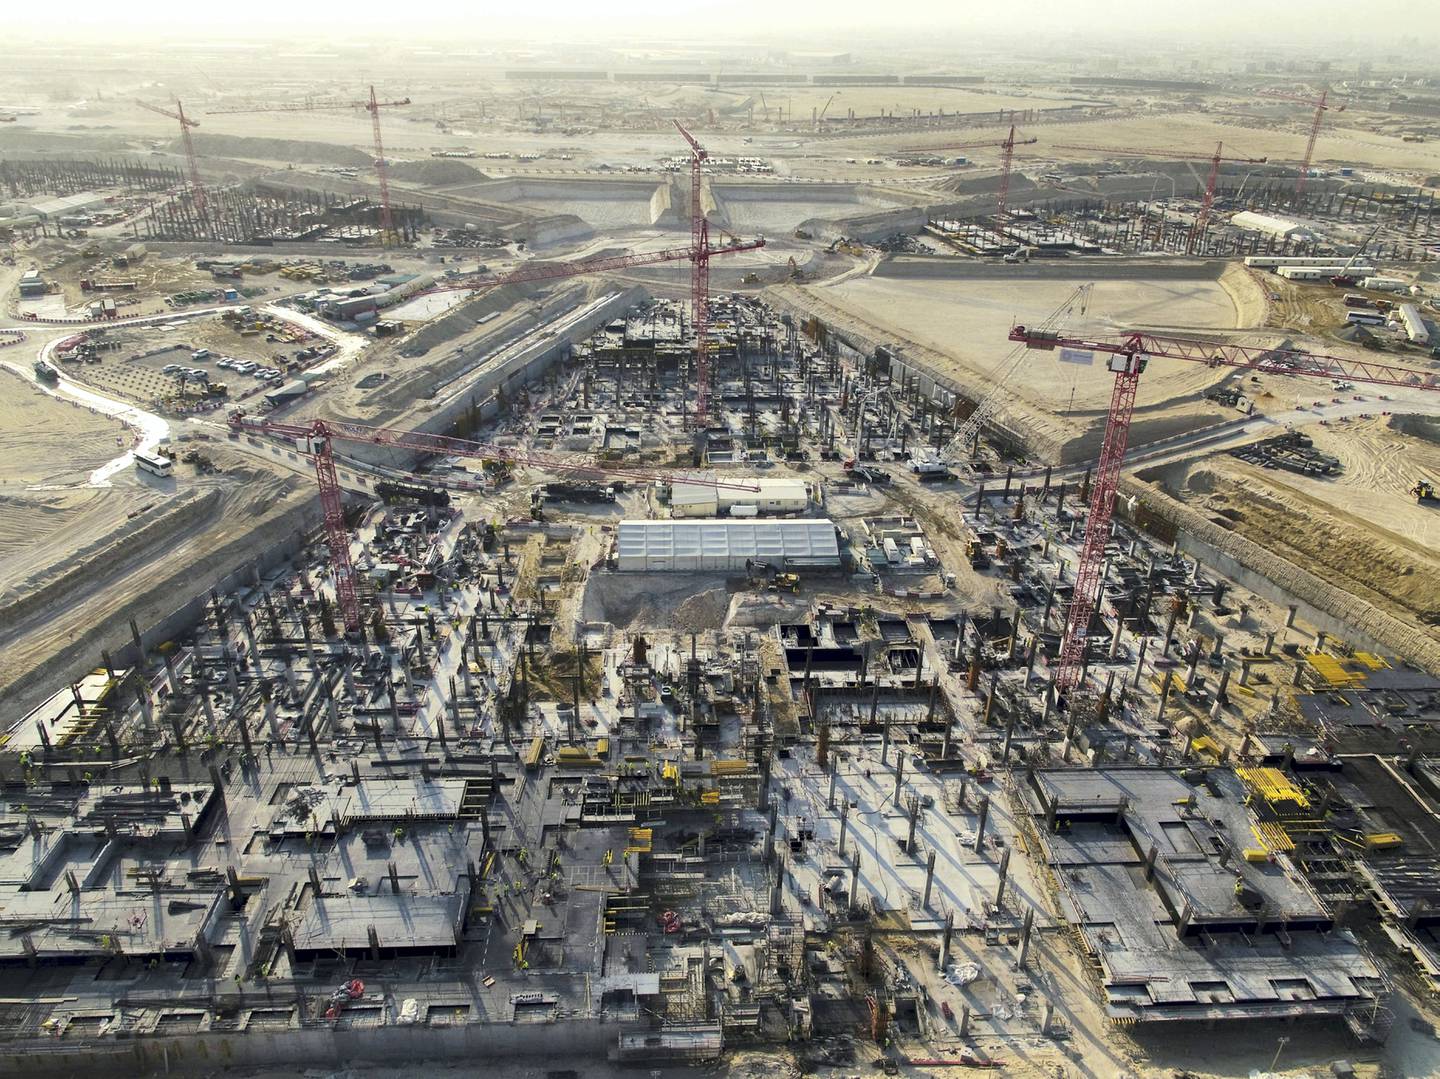 Construction work progresses at the Expo 2020 Dubai site in February 2018. Photo: Dubai Media Office